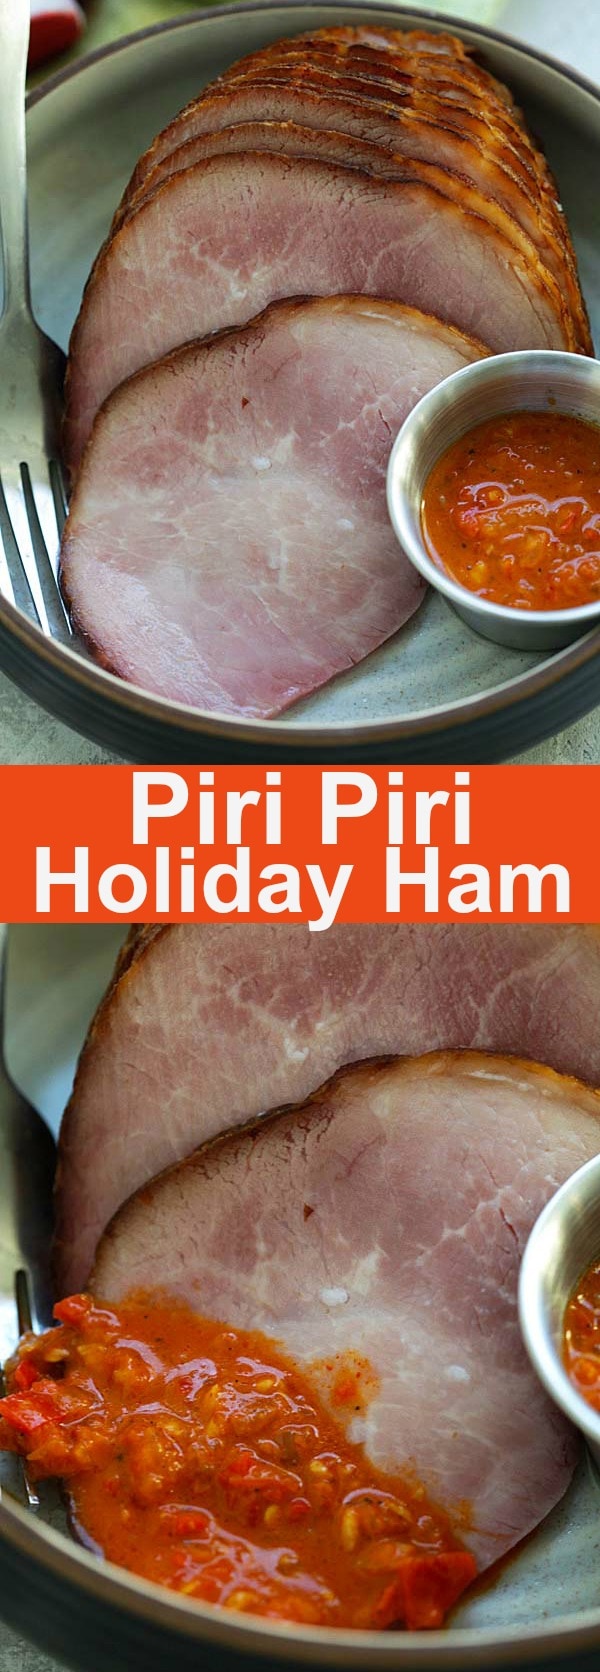 Piri Piri Holiday Ham - Jazz up your holiday ham this season with some spices of piri piri sauce. This recipe is a crowd pleaser | rasamalaysia.com